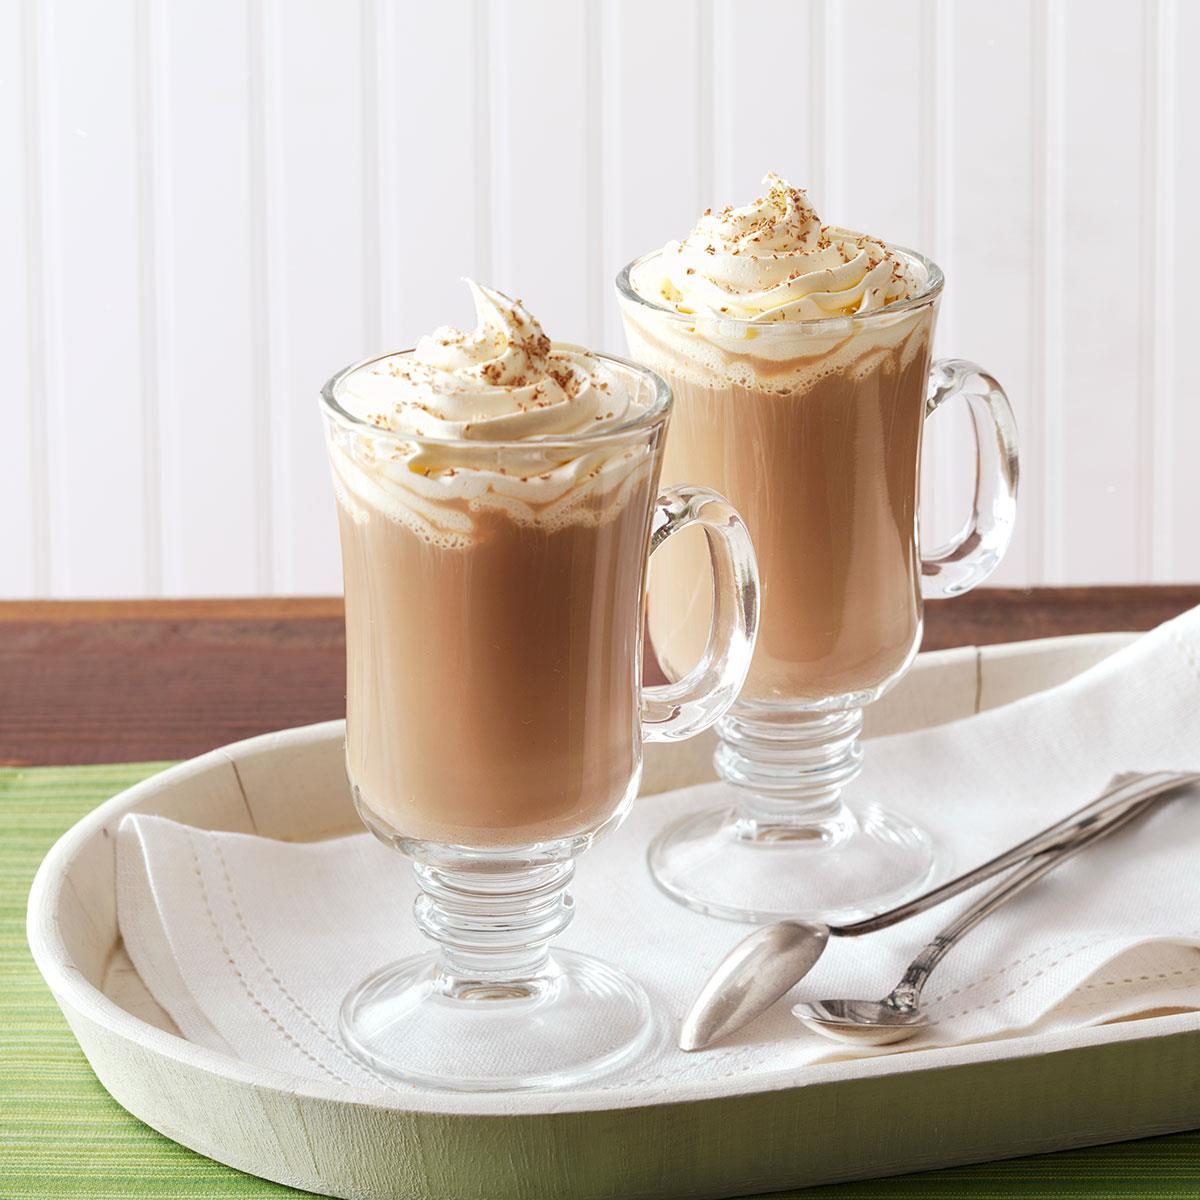 Creamy Irish Coffee Recipe: How to Make It